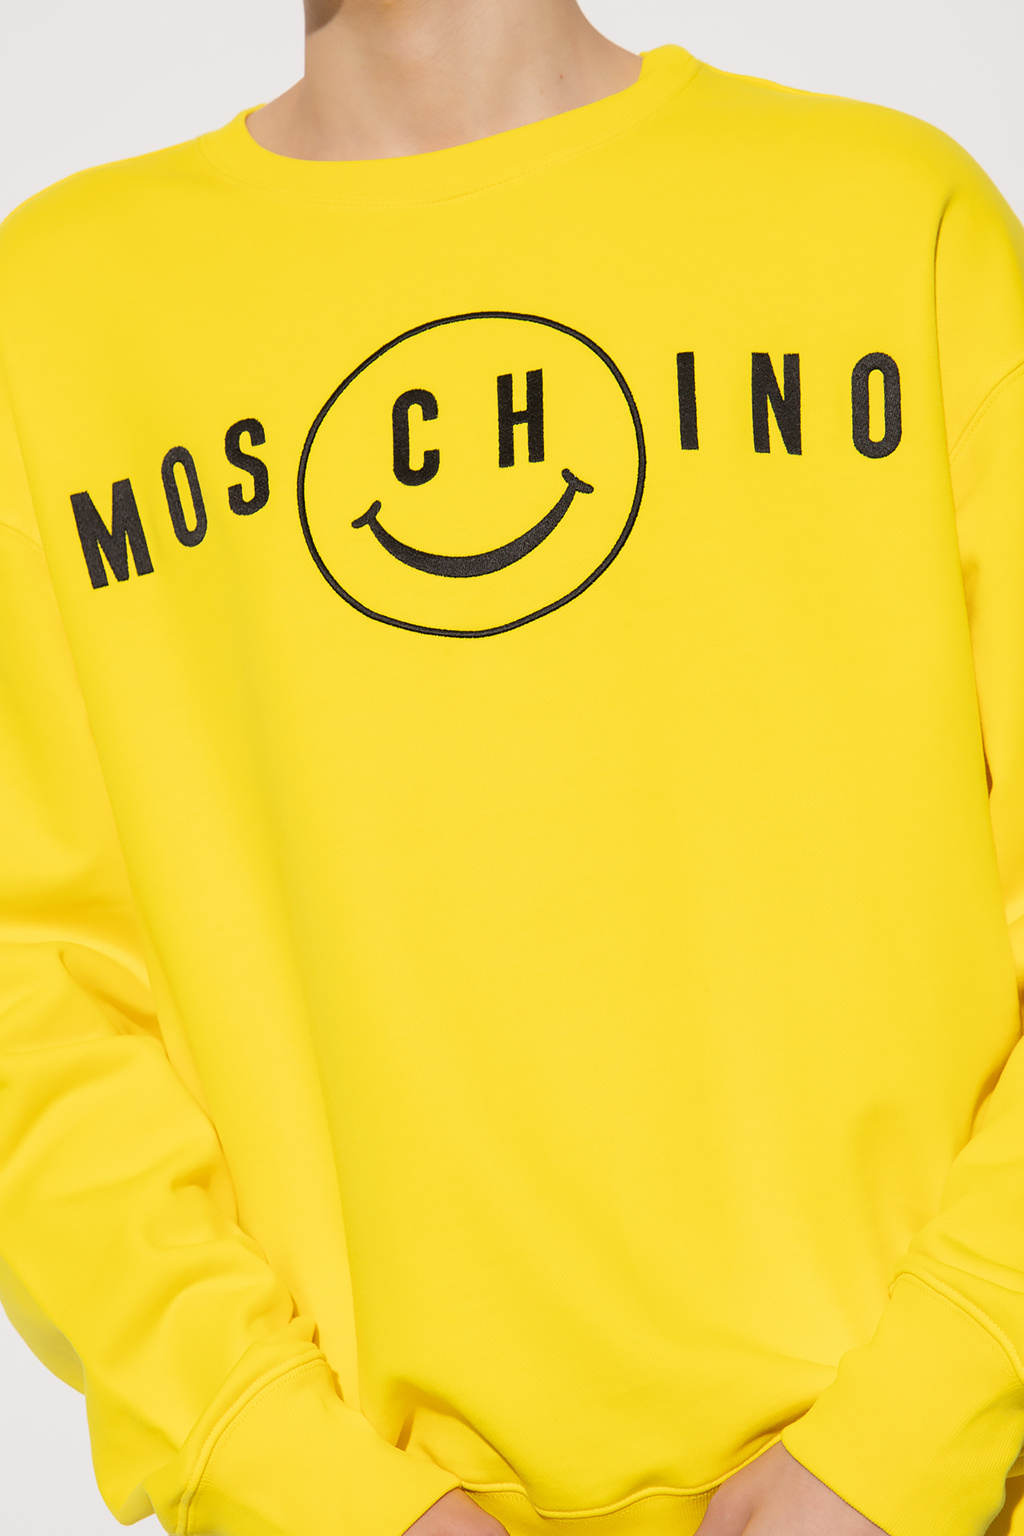 Moschino T-shirt mangas compridas Neck And Neck